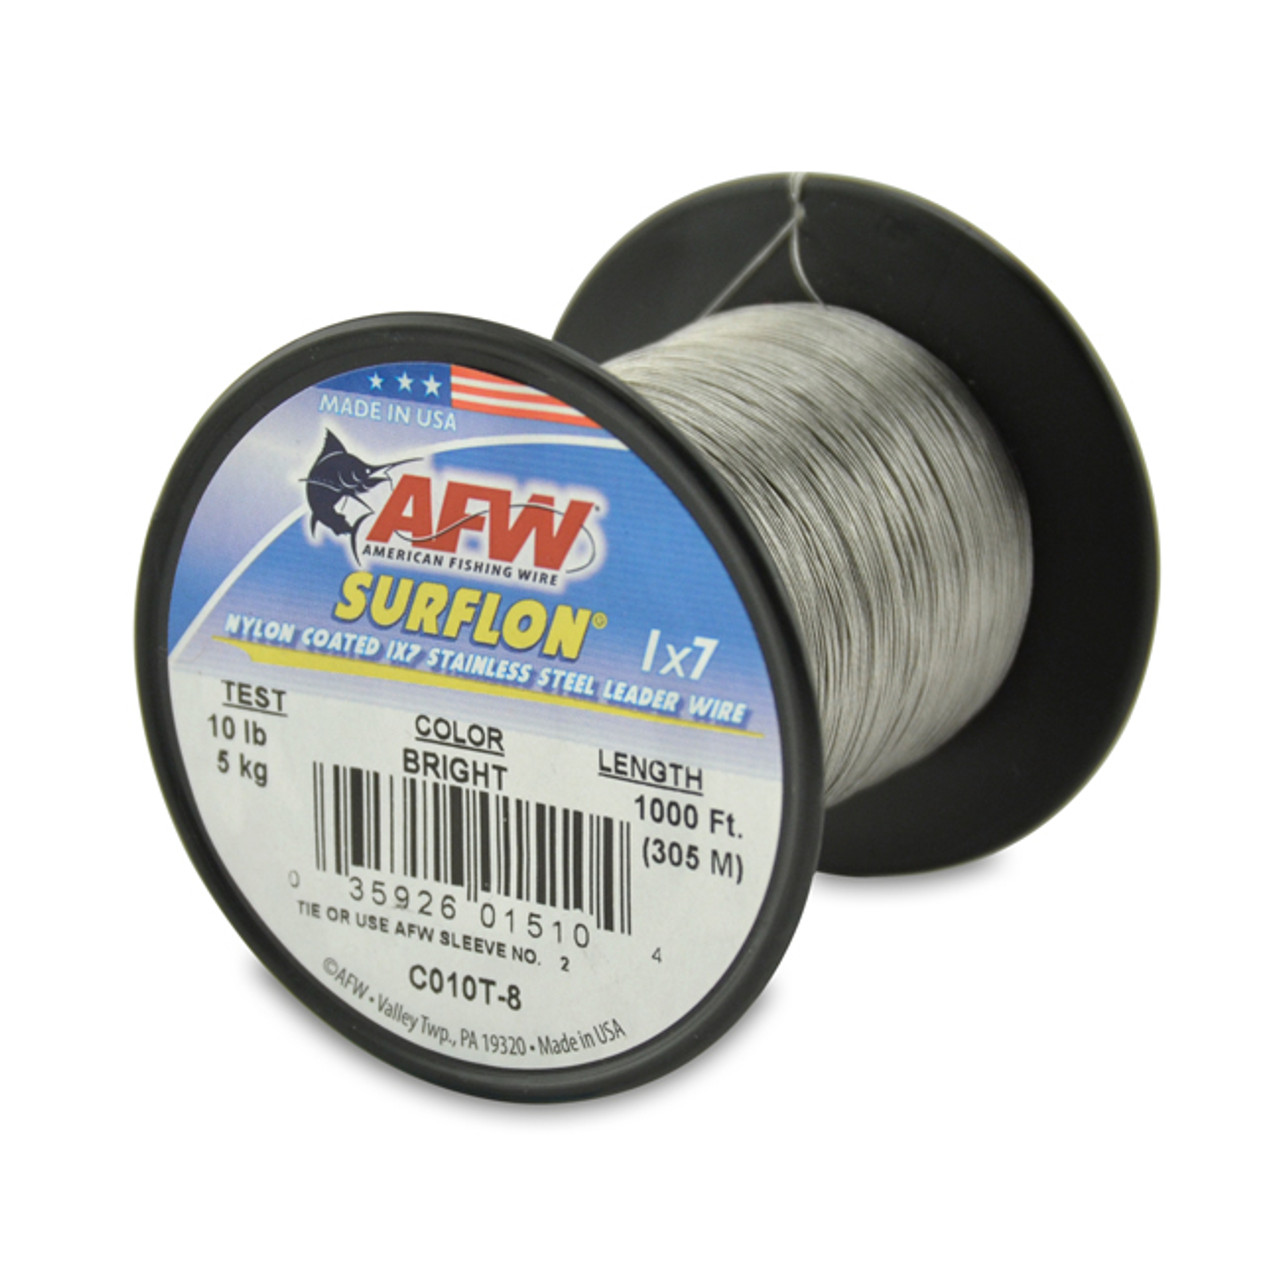 American Fishing Wire Surflon 1000ft Bright Test:10 (C010T-8)